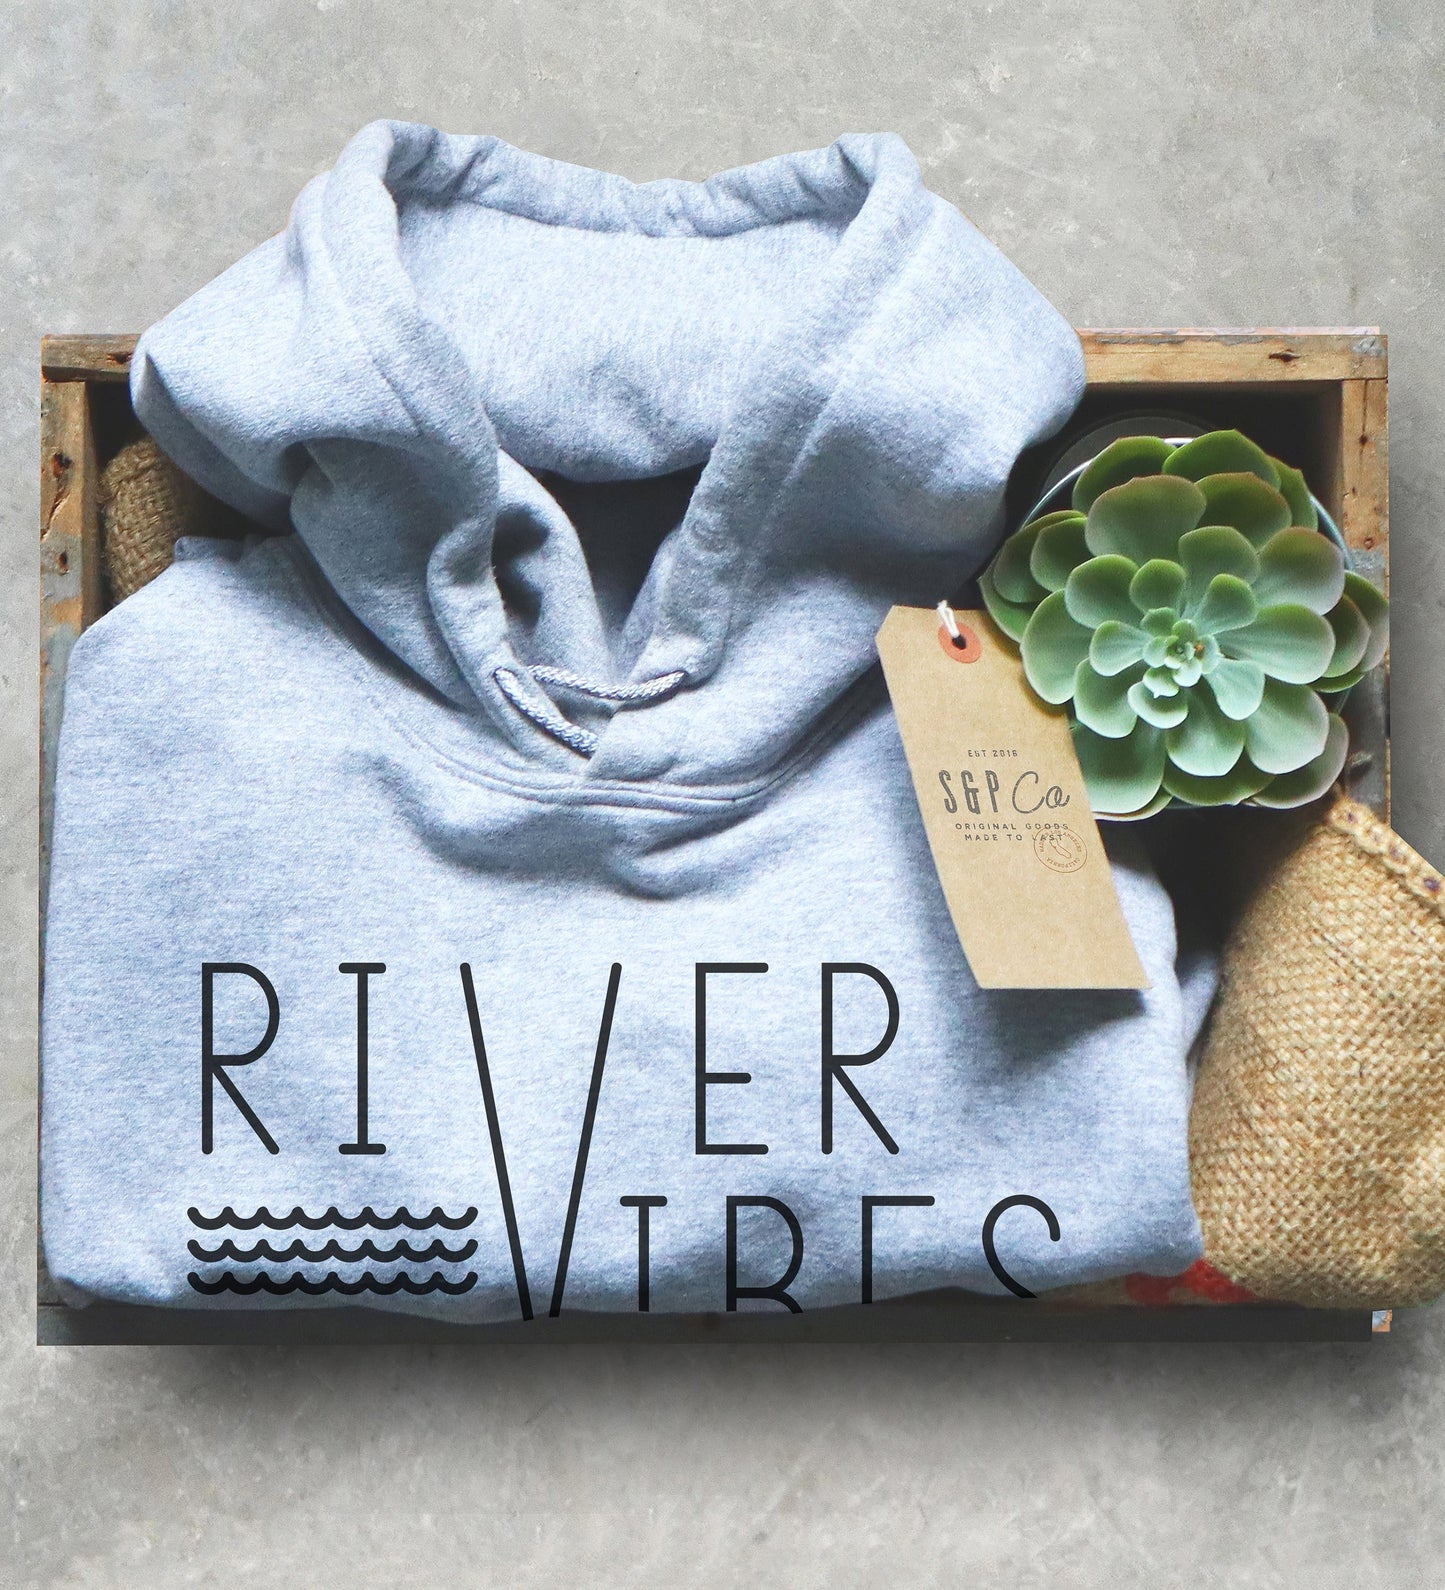 River Vibes Unisex Hoodie - Kayak Shirt, Rafting Shirt, Canyoning Tee, Fly Fishing Shirt, Paddleboard Shirt, River Cruise Shirt, Boating Tee